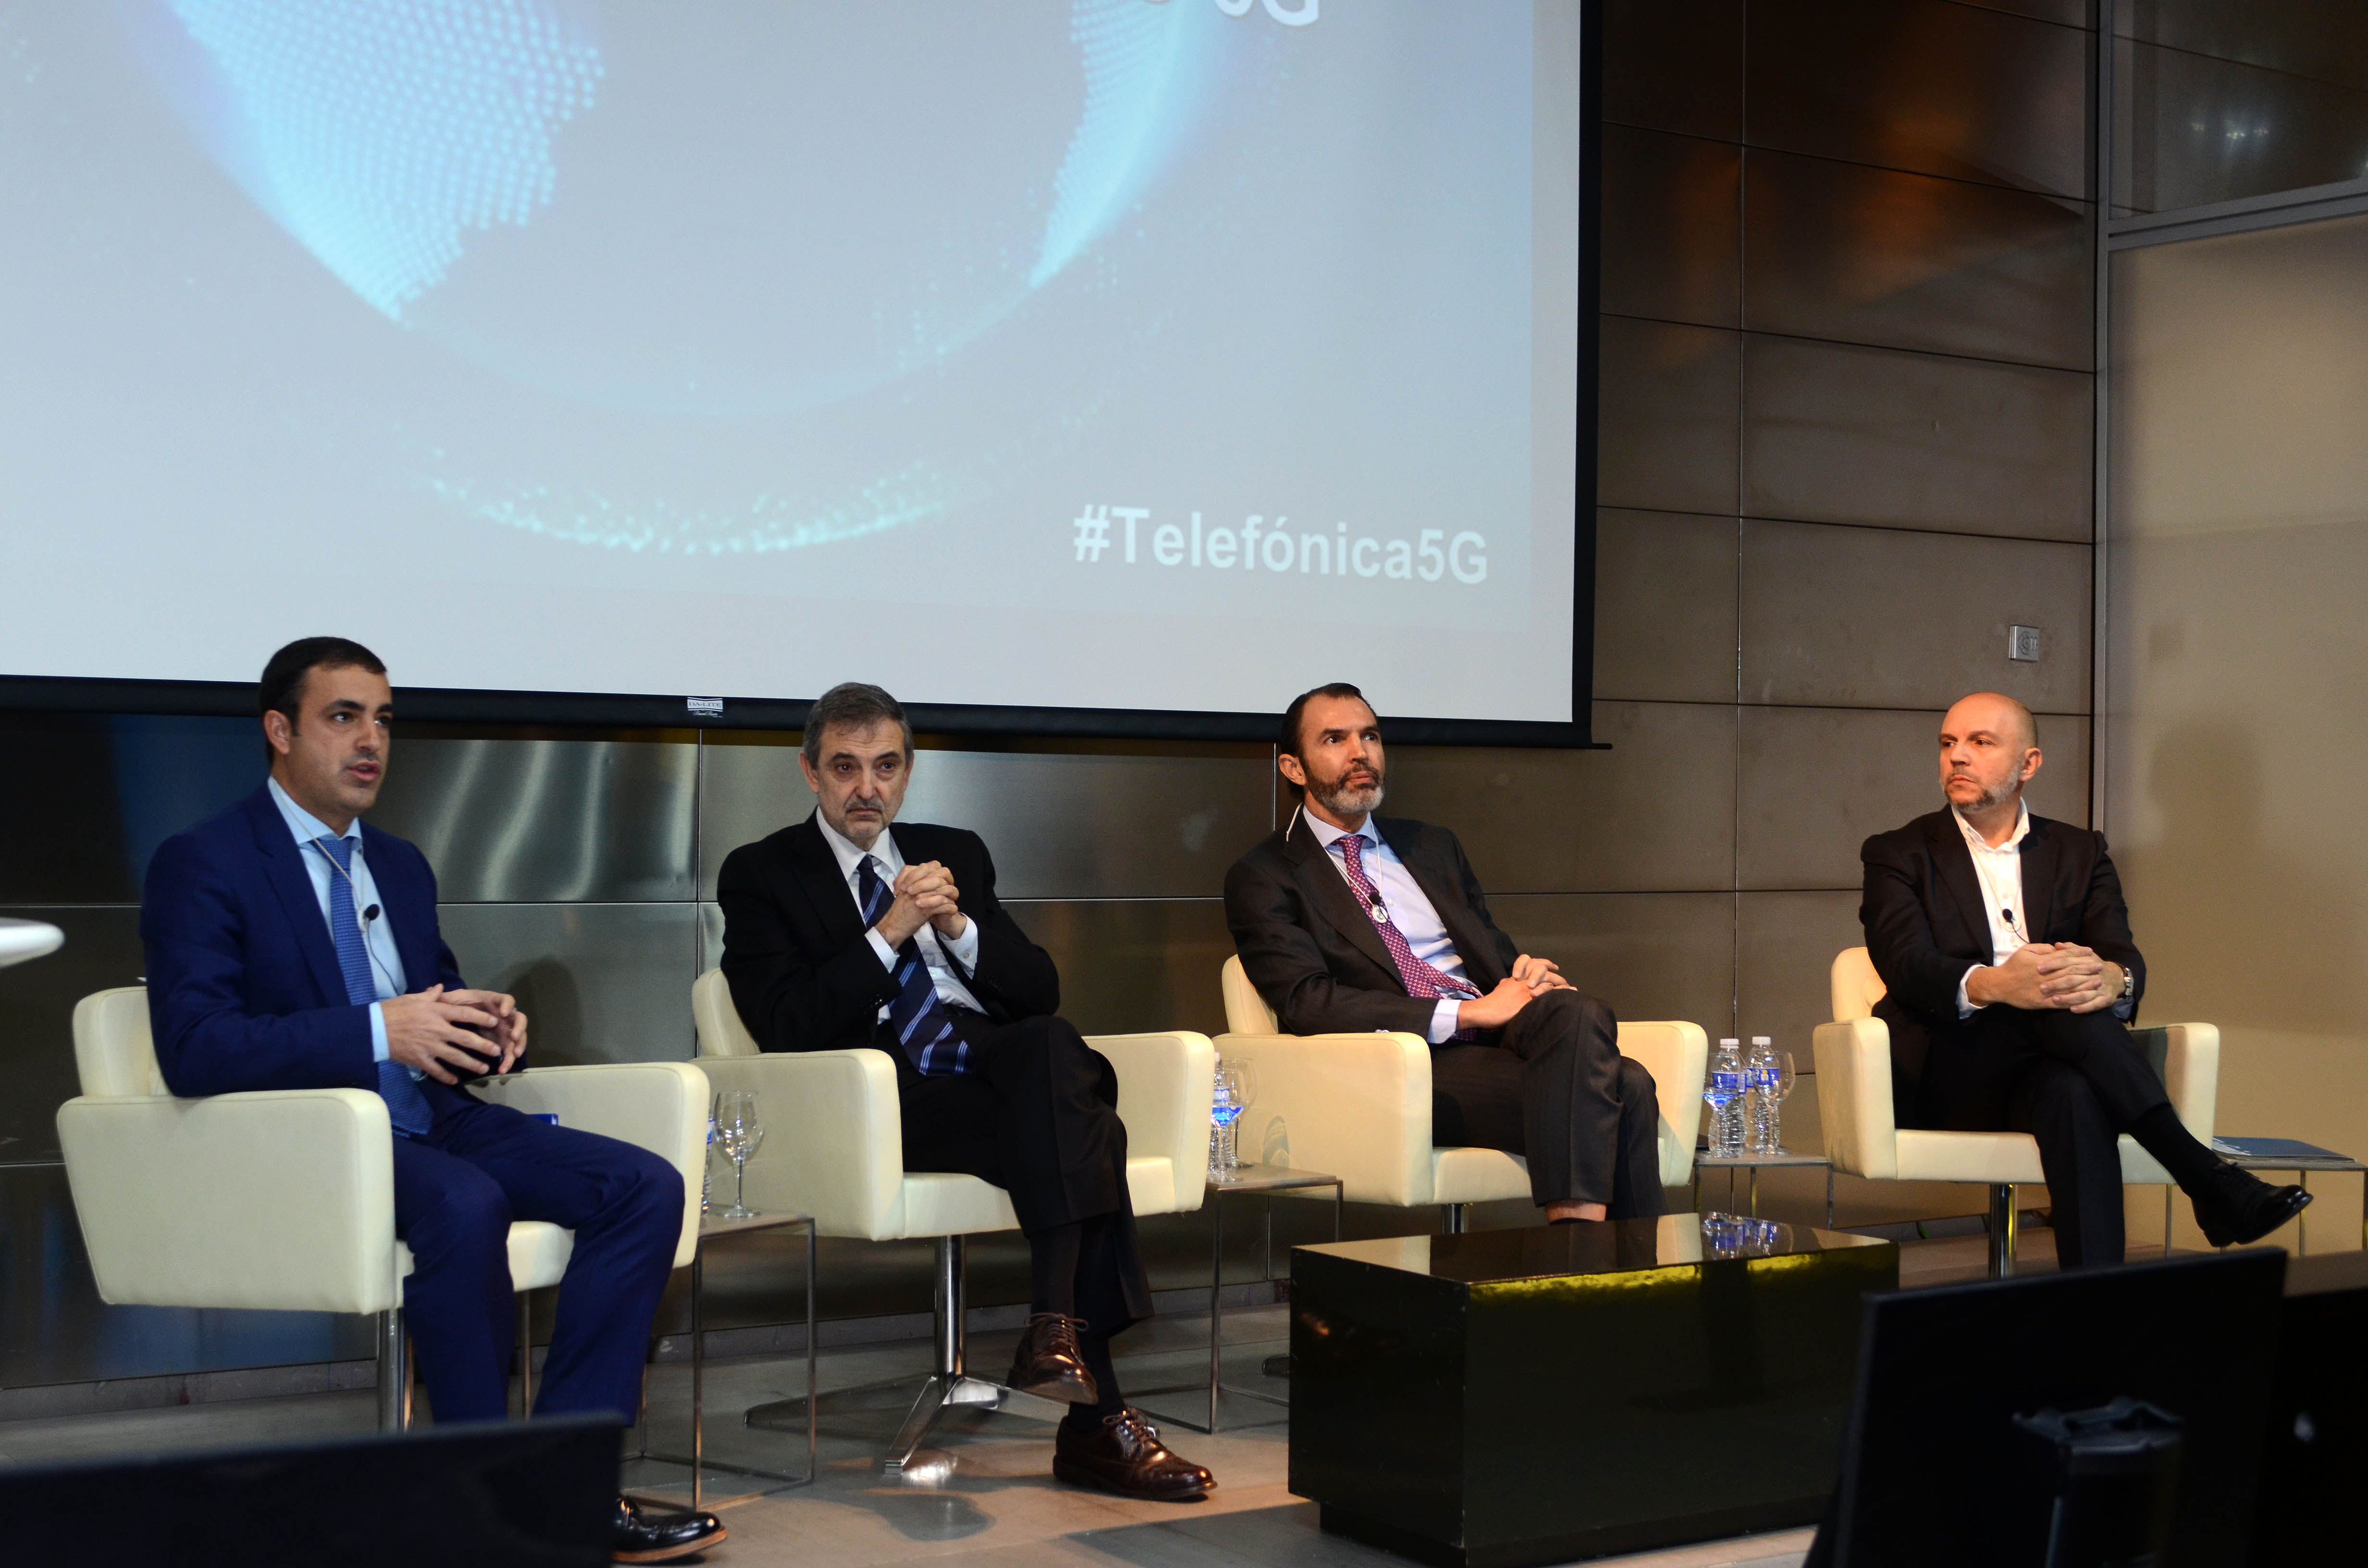 From left to right: Álvaro Sánchez, Manager of Telefónica’s account at Nokia;  Luis Miguel Gilpérez, CEO of Telefónica España; José Antonio López, Chairman of Ericsson España, and Joaquín Mata, Director of Operations, Network and IT at Telefónica España.